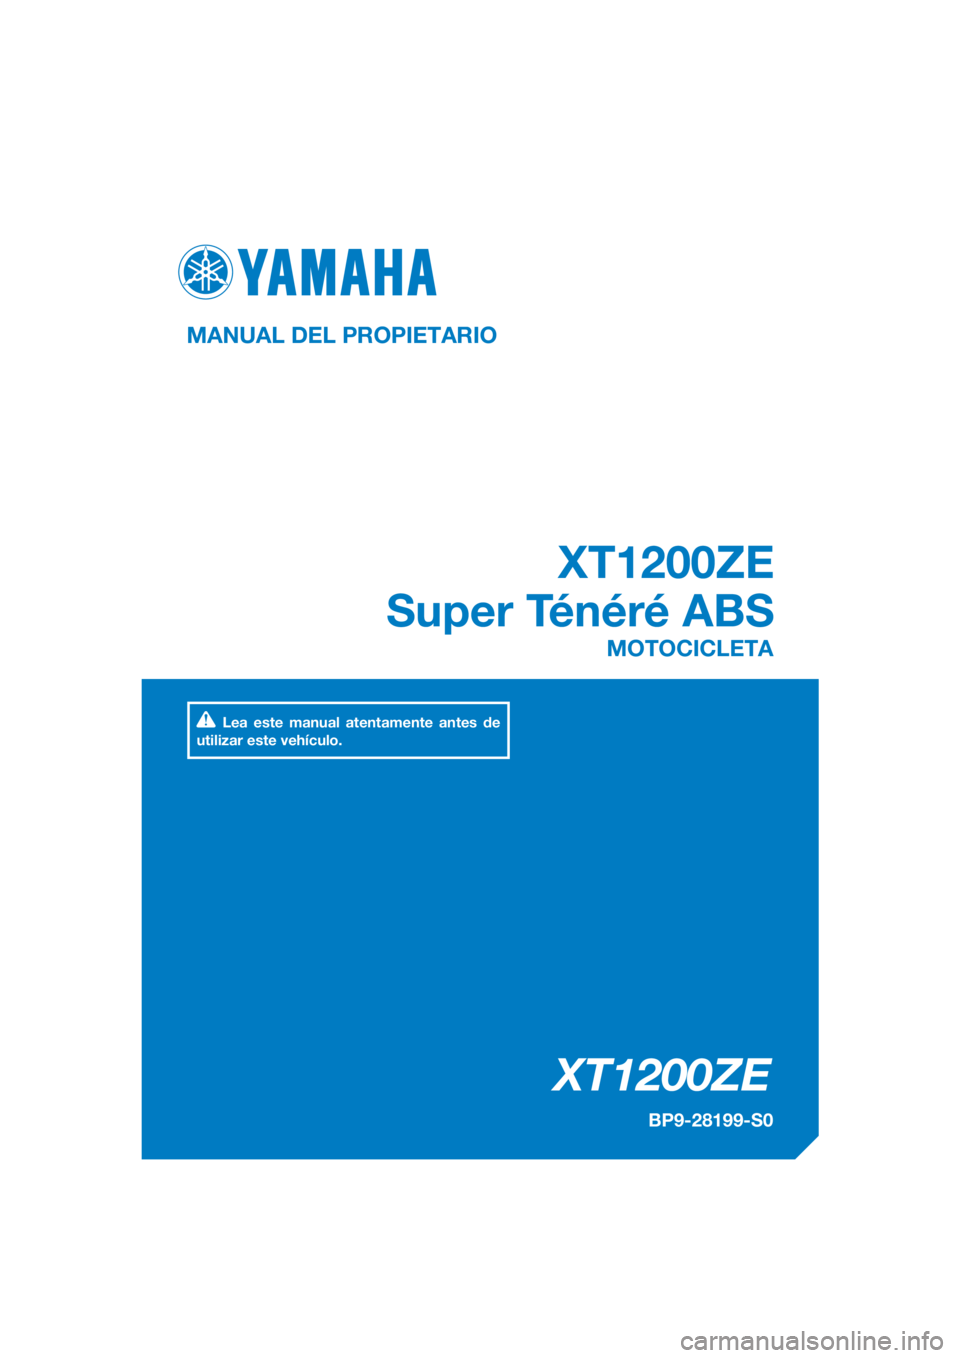 YAMAHA XT1200ZE 2017  Manuale de Empleo (in Spanish) DIC183
XT1200ZE
XT1200ZE
Super Ténéré ABS
MANUAL DEL PROPIETARIO
BP9-28199-S0
MOTOCICLETA
Lea este manual atentamente antes de 
utilizar este vehículo.
[Spanish  (S)] 